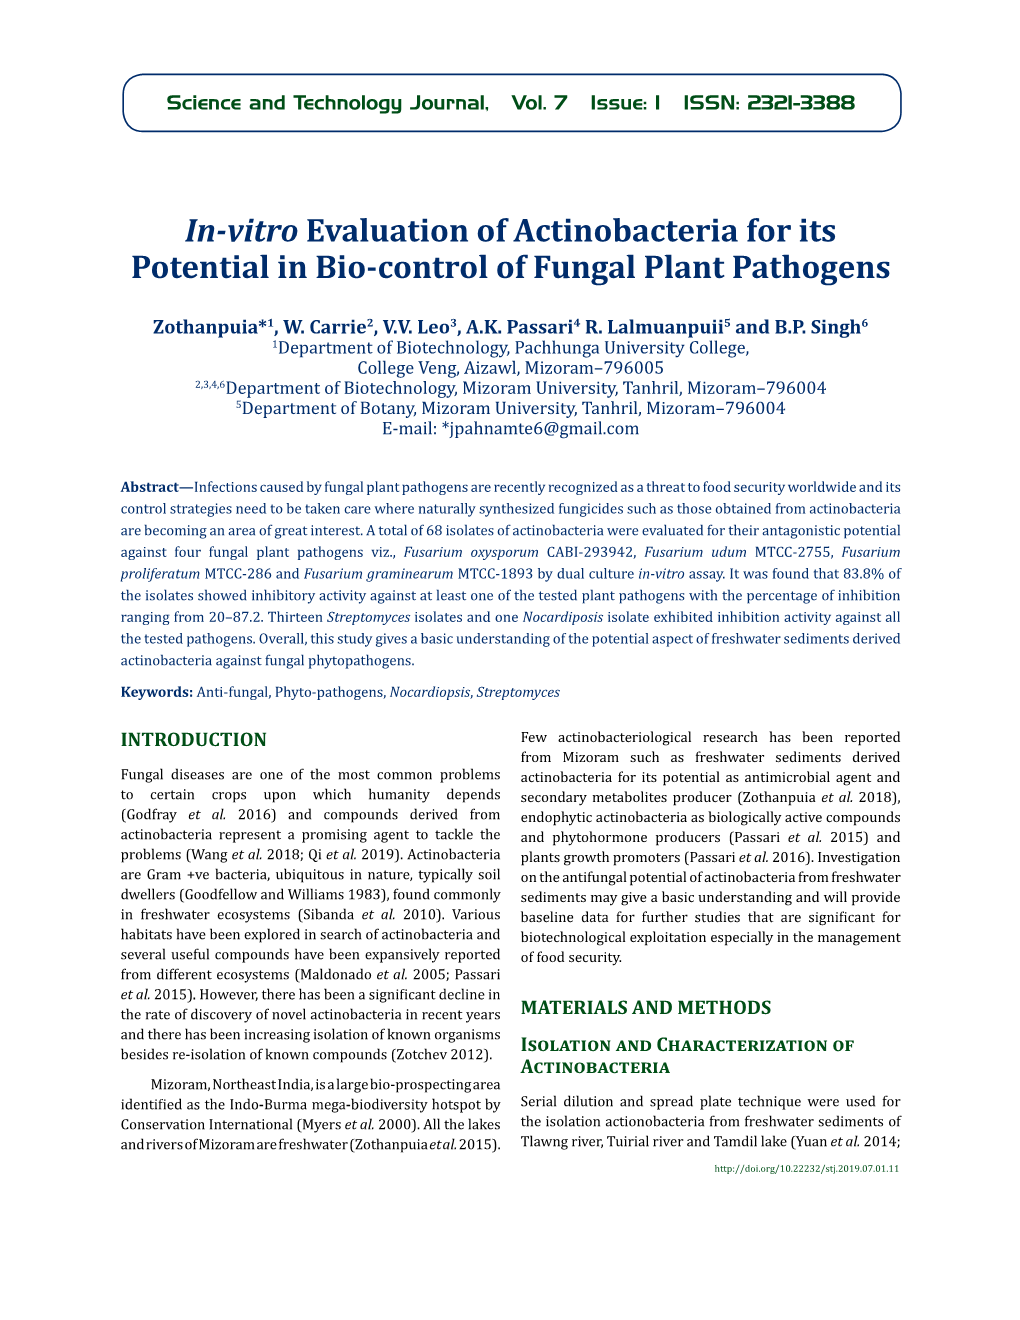 In-Vitro Evaluation of Actinobacteria for Its Potential in Bio-Control of Fungal Plant Pathogens